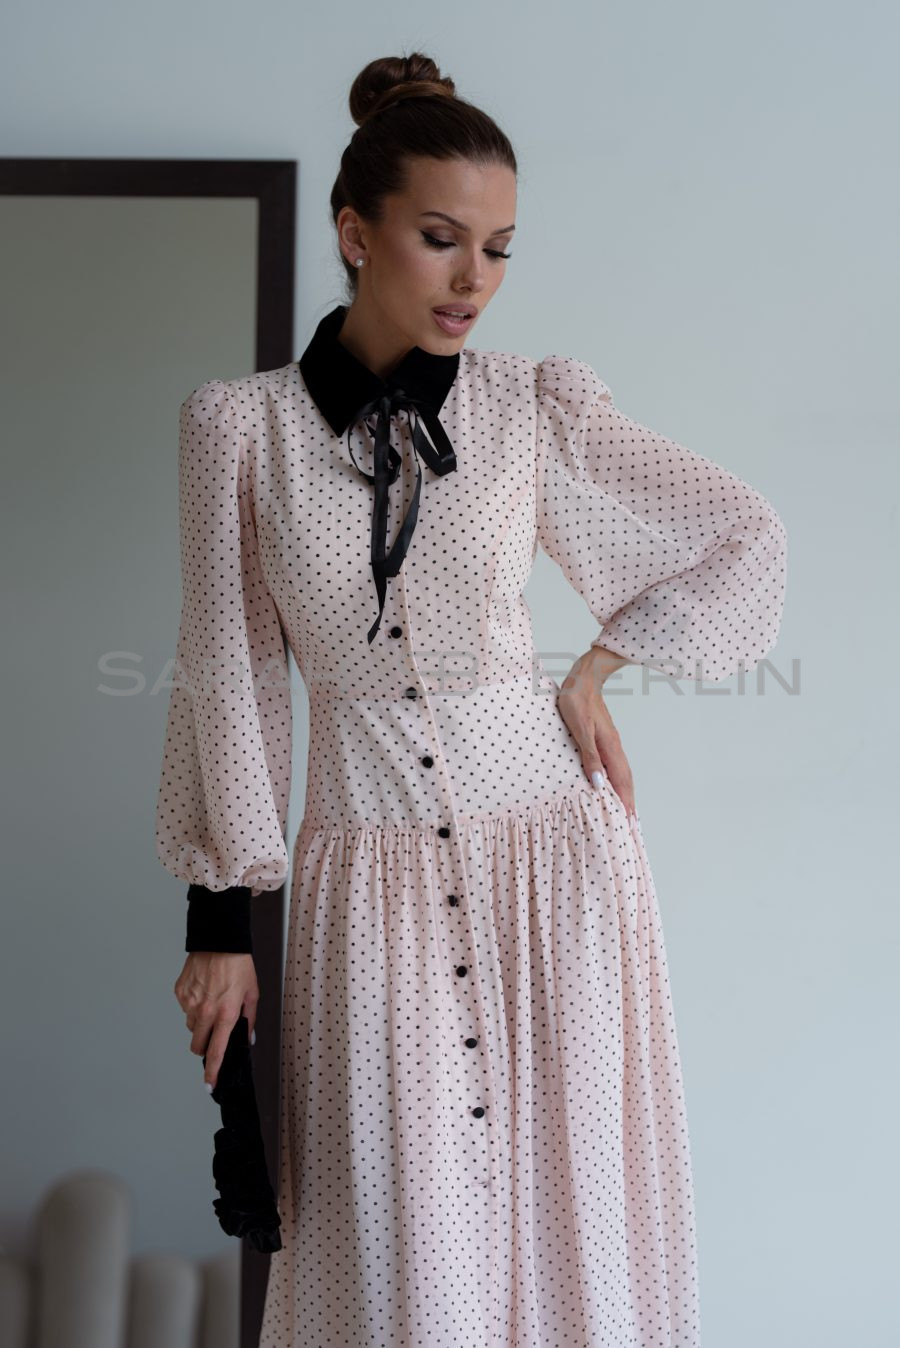 Polka dot chiffon dress with velvet collar and cuffs